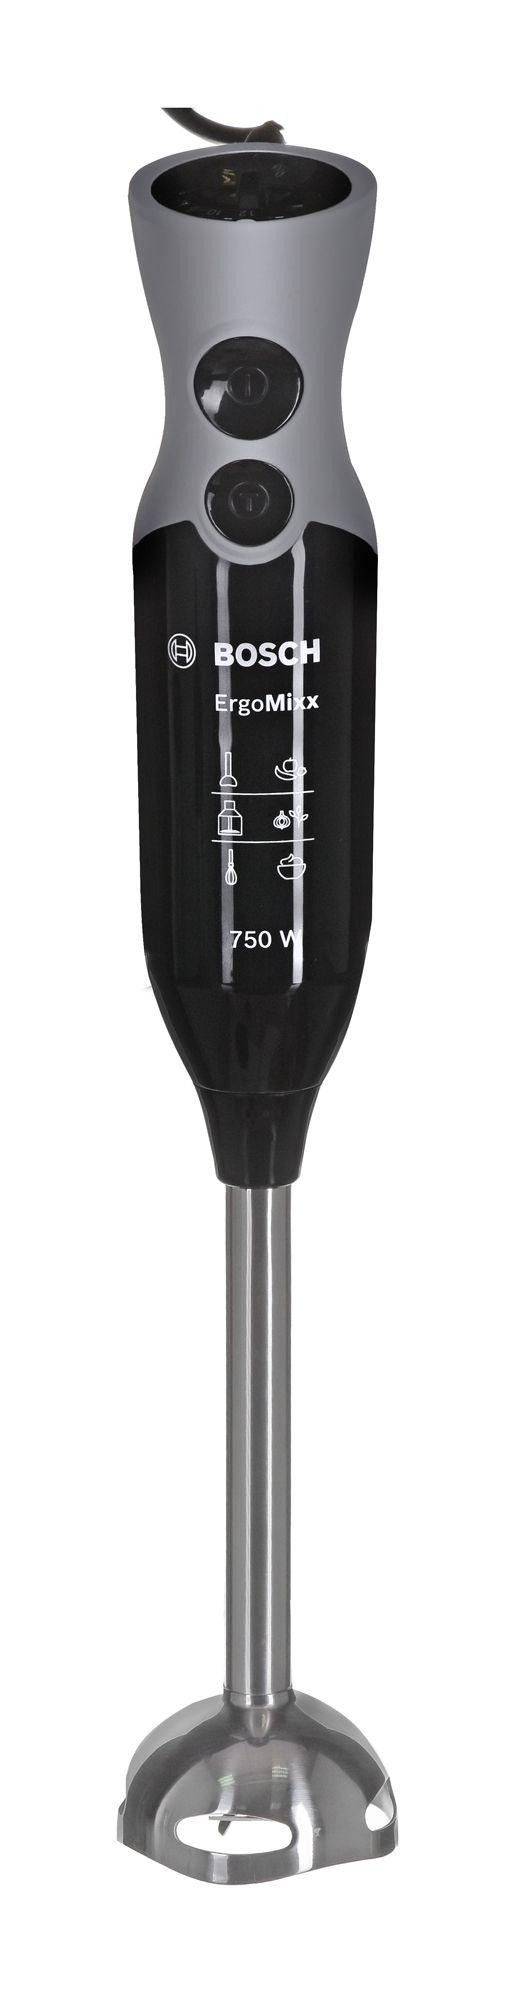 Bosch MSM67140 blender Immersion blender Black 750 W